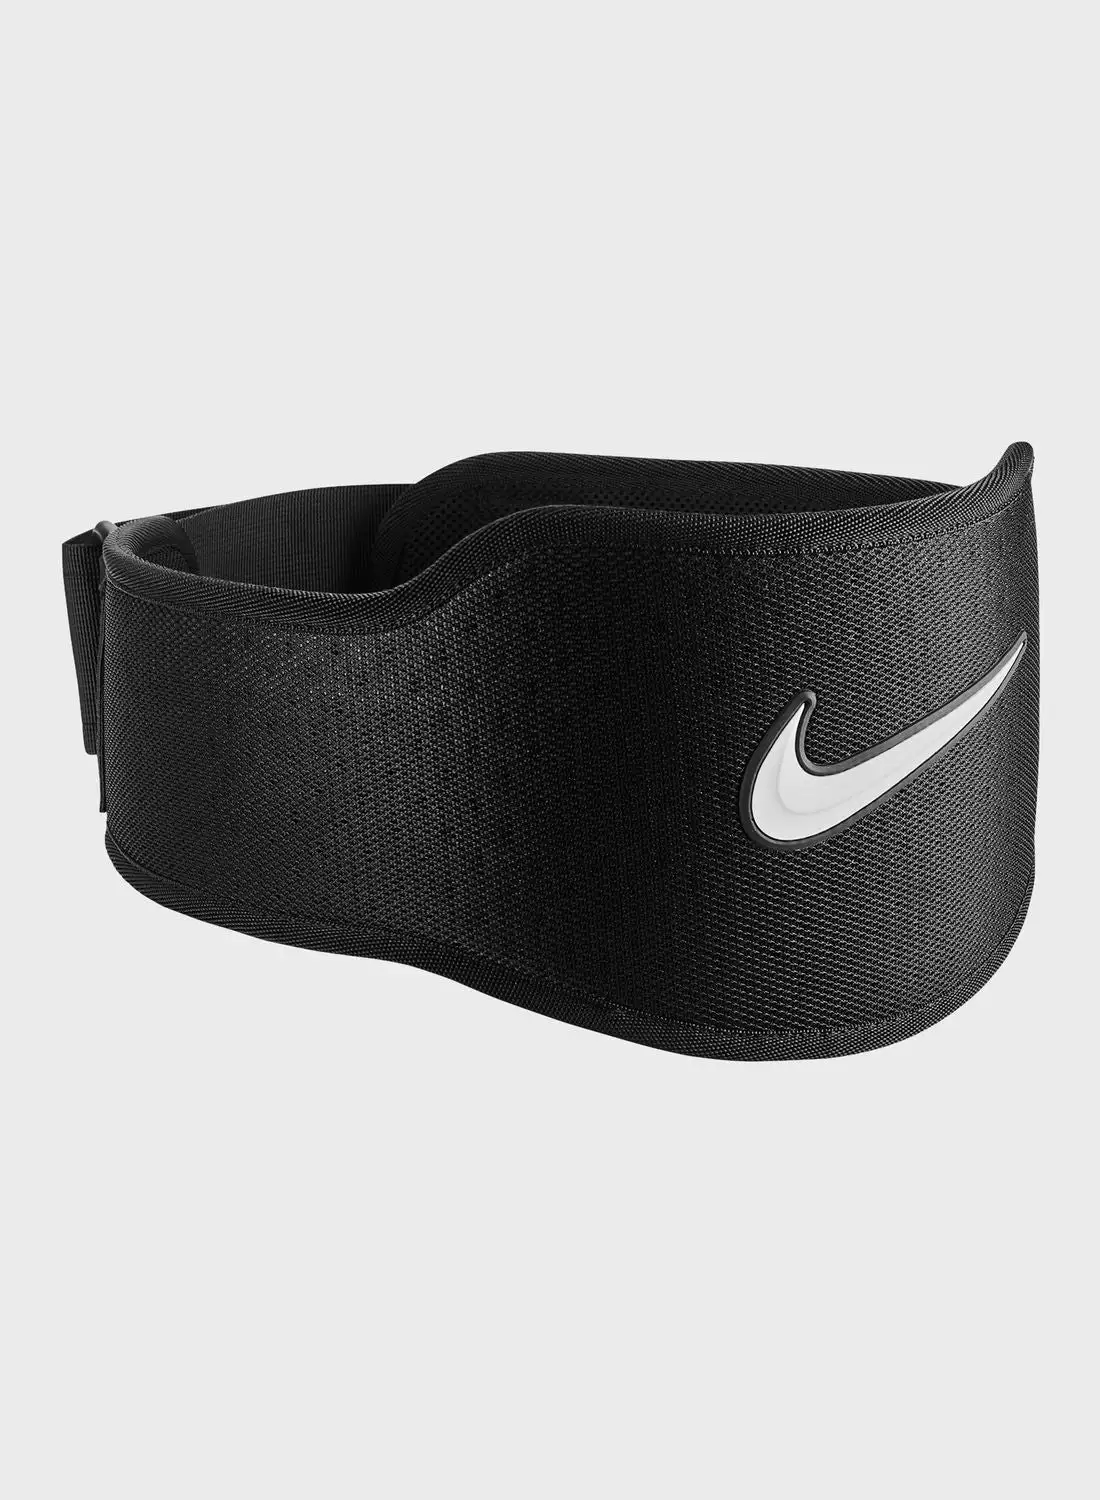 Nike 3.0 Strength Training Belt